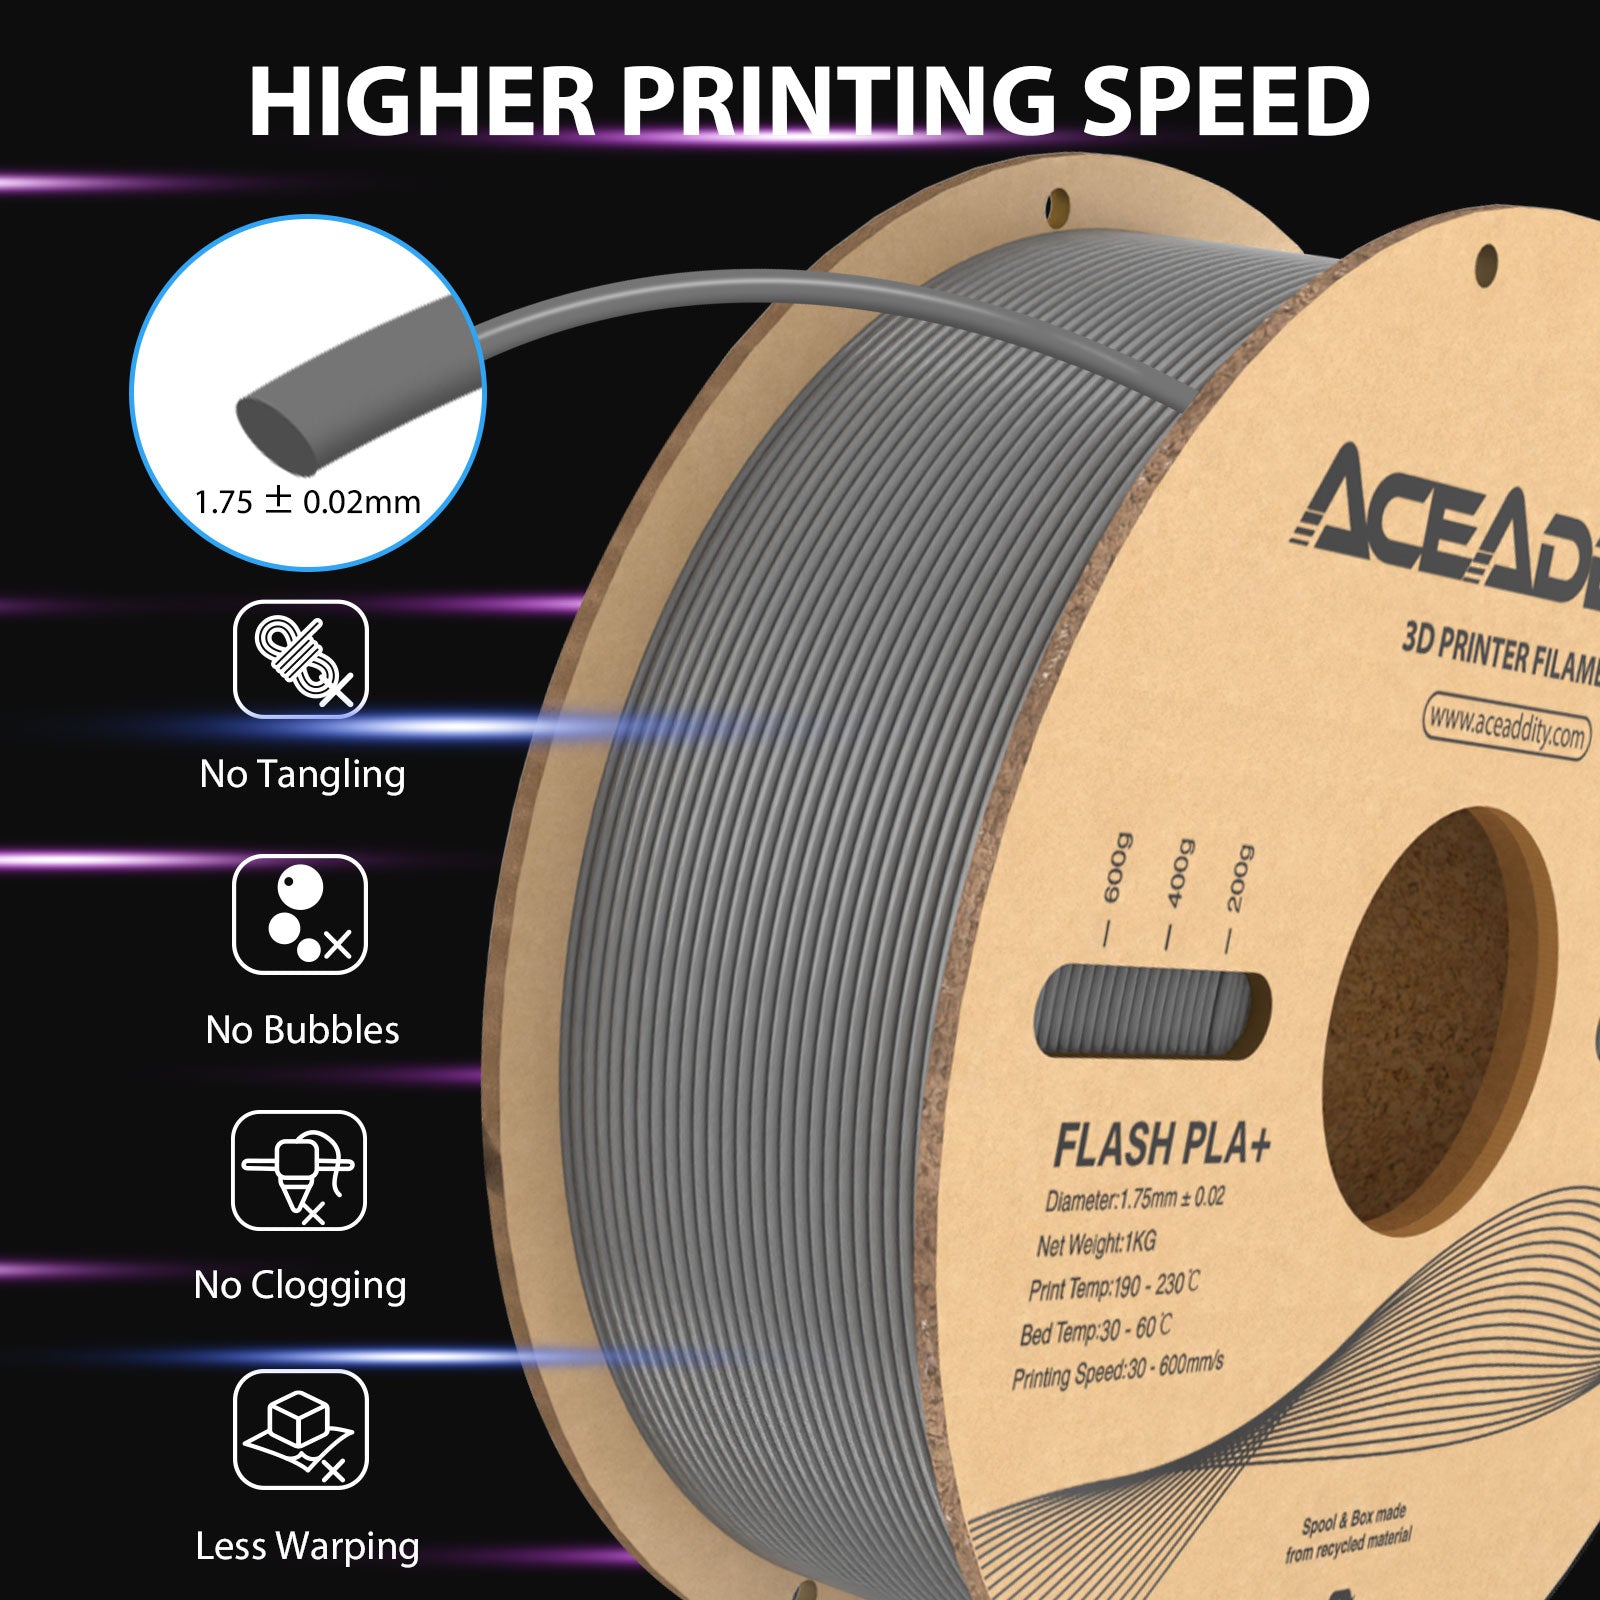 🚀 Impression 3D Haute Vitesse : Test AceAddity Flash PLA vs. Standard  PLA🔥 